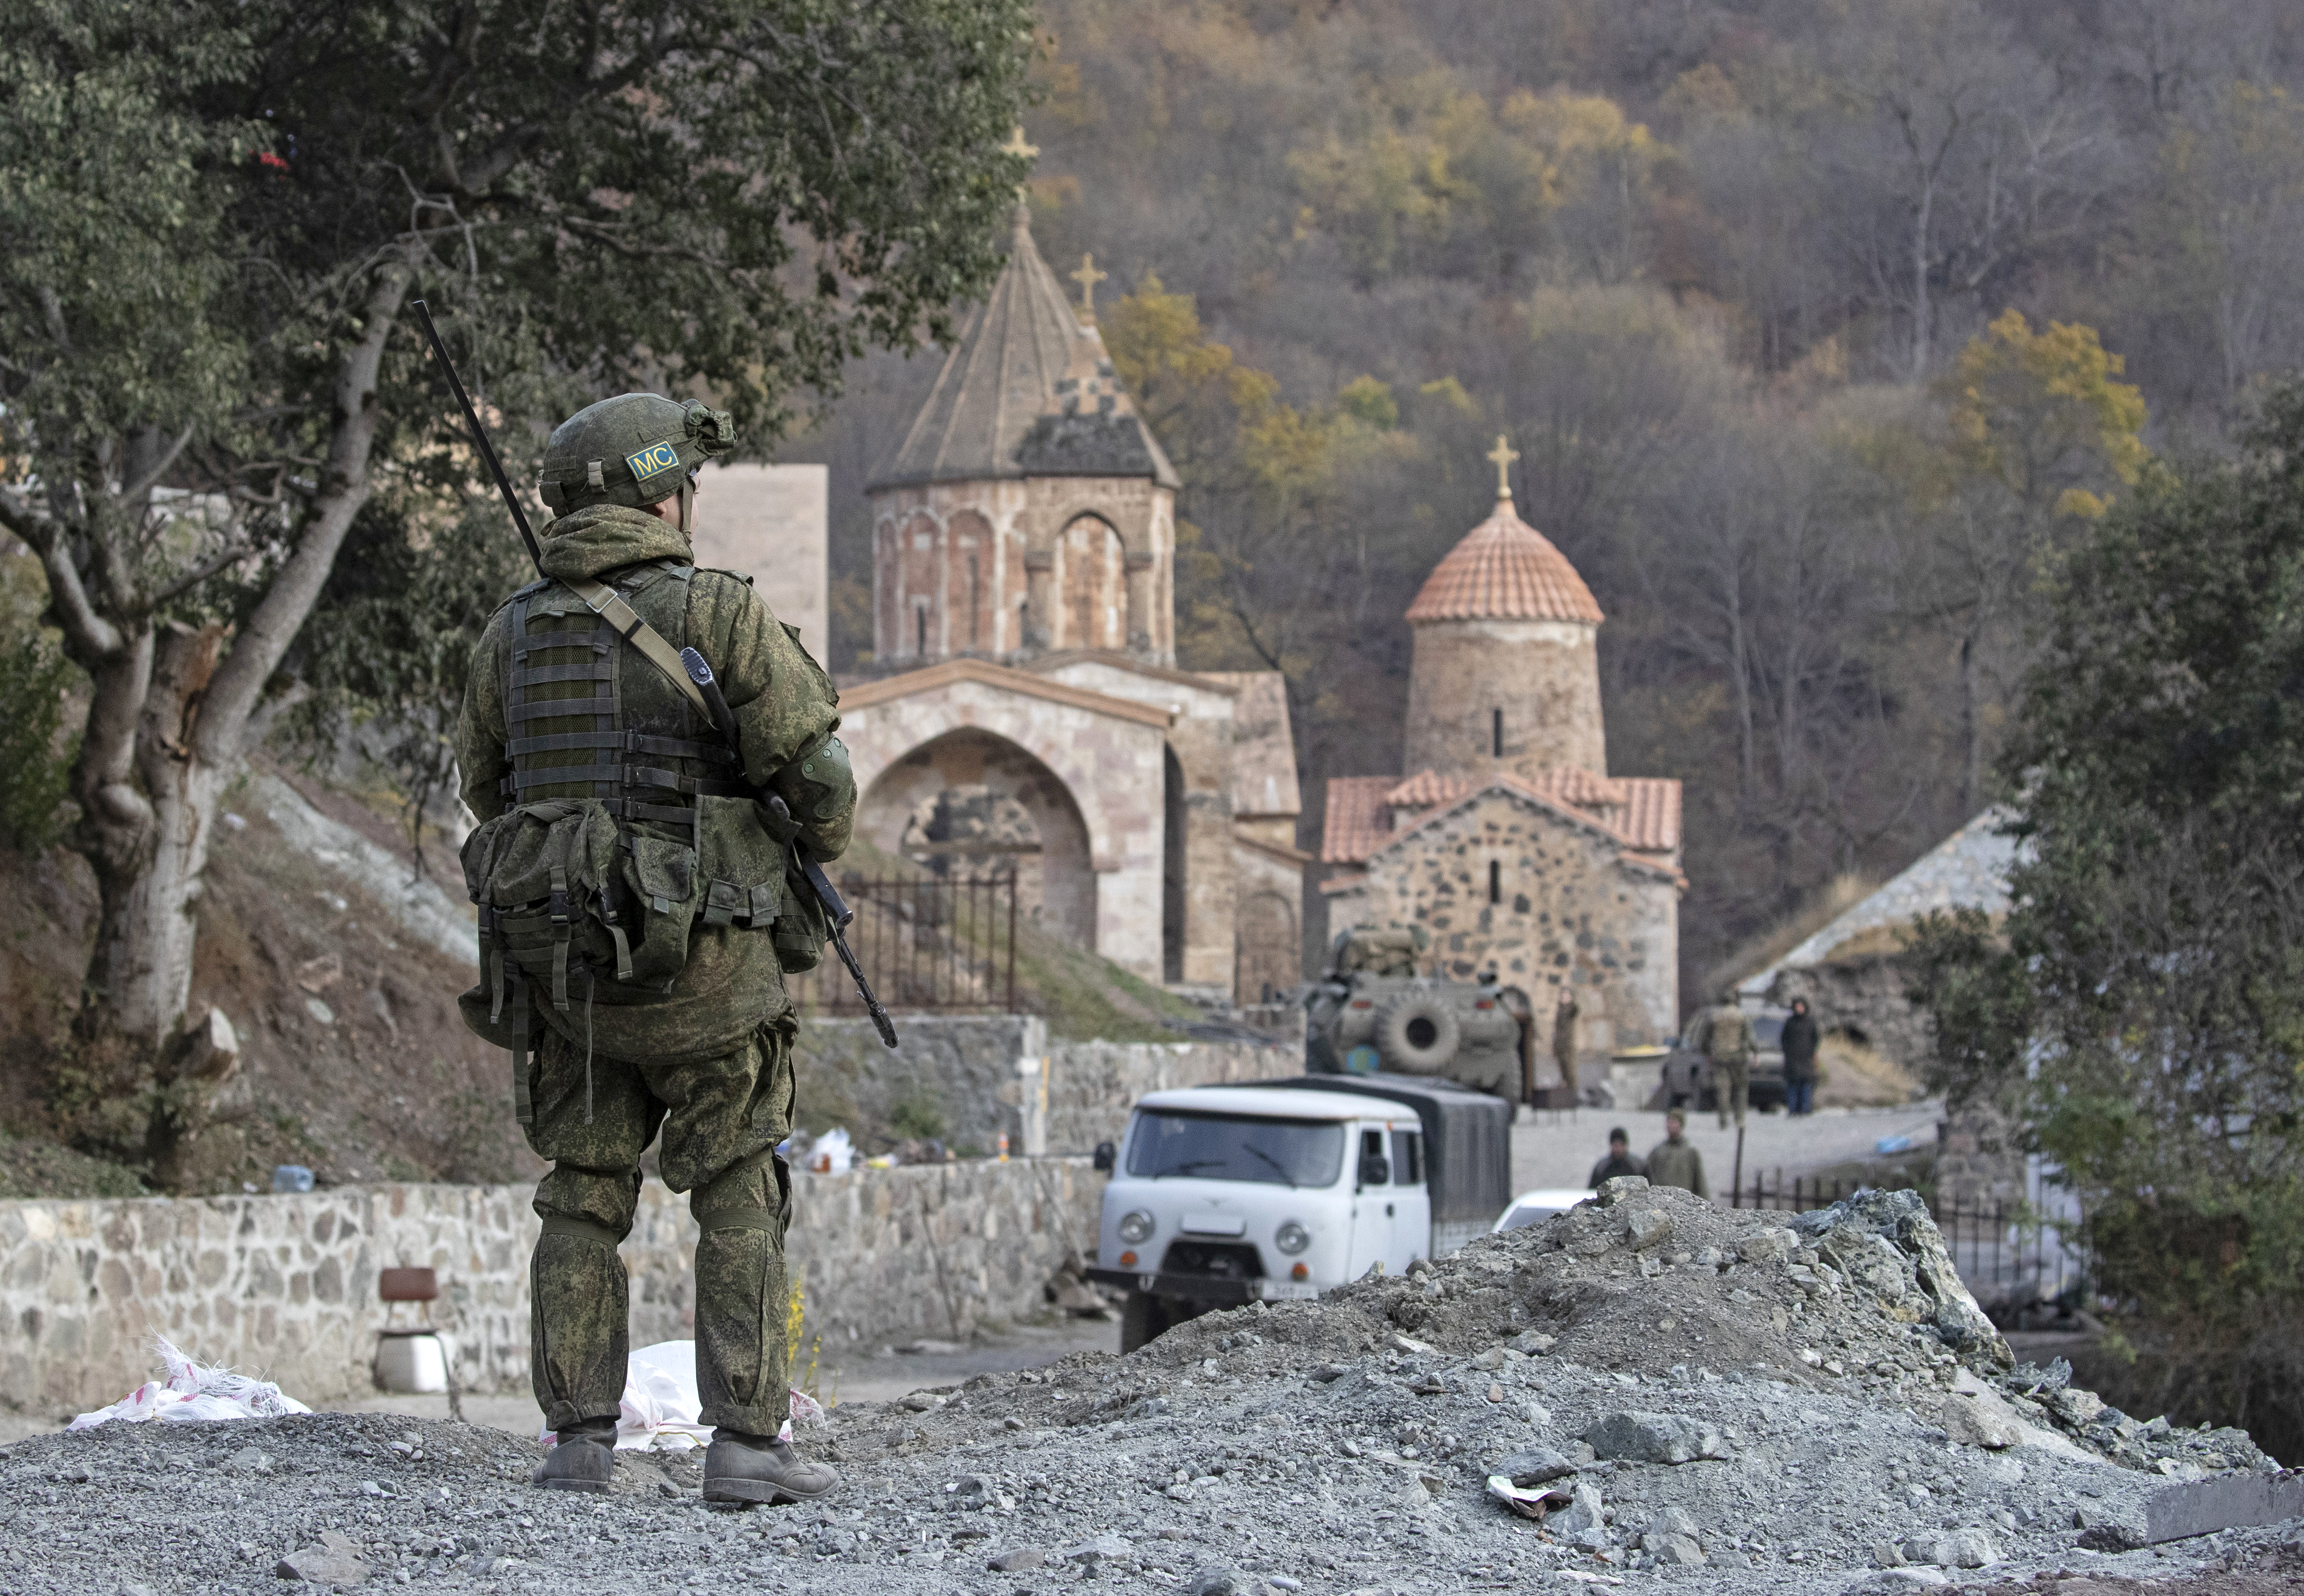 Geopolitics of the Nagorno-Karabakh War